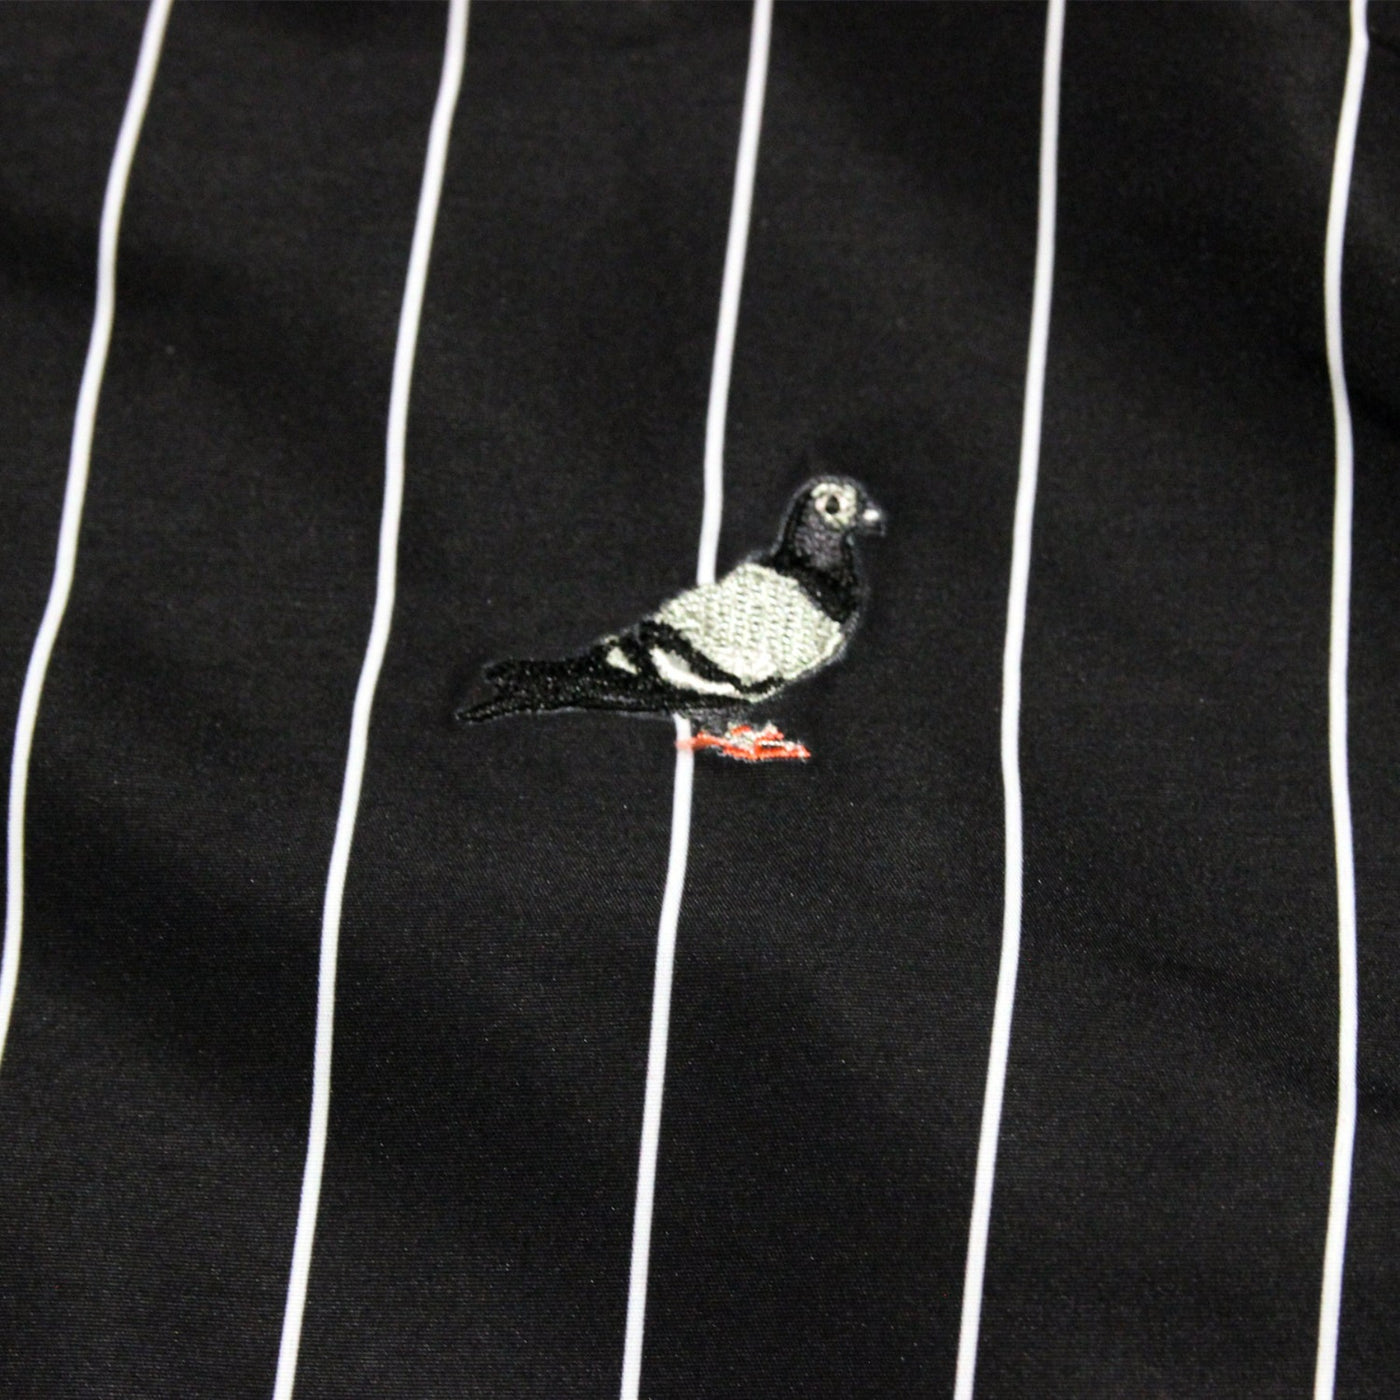 Staple Pinstripe Baseball jacket black - Shop-Tetuan